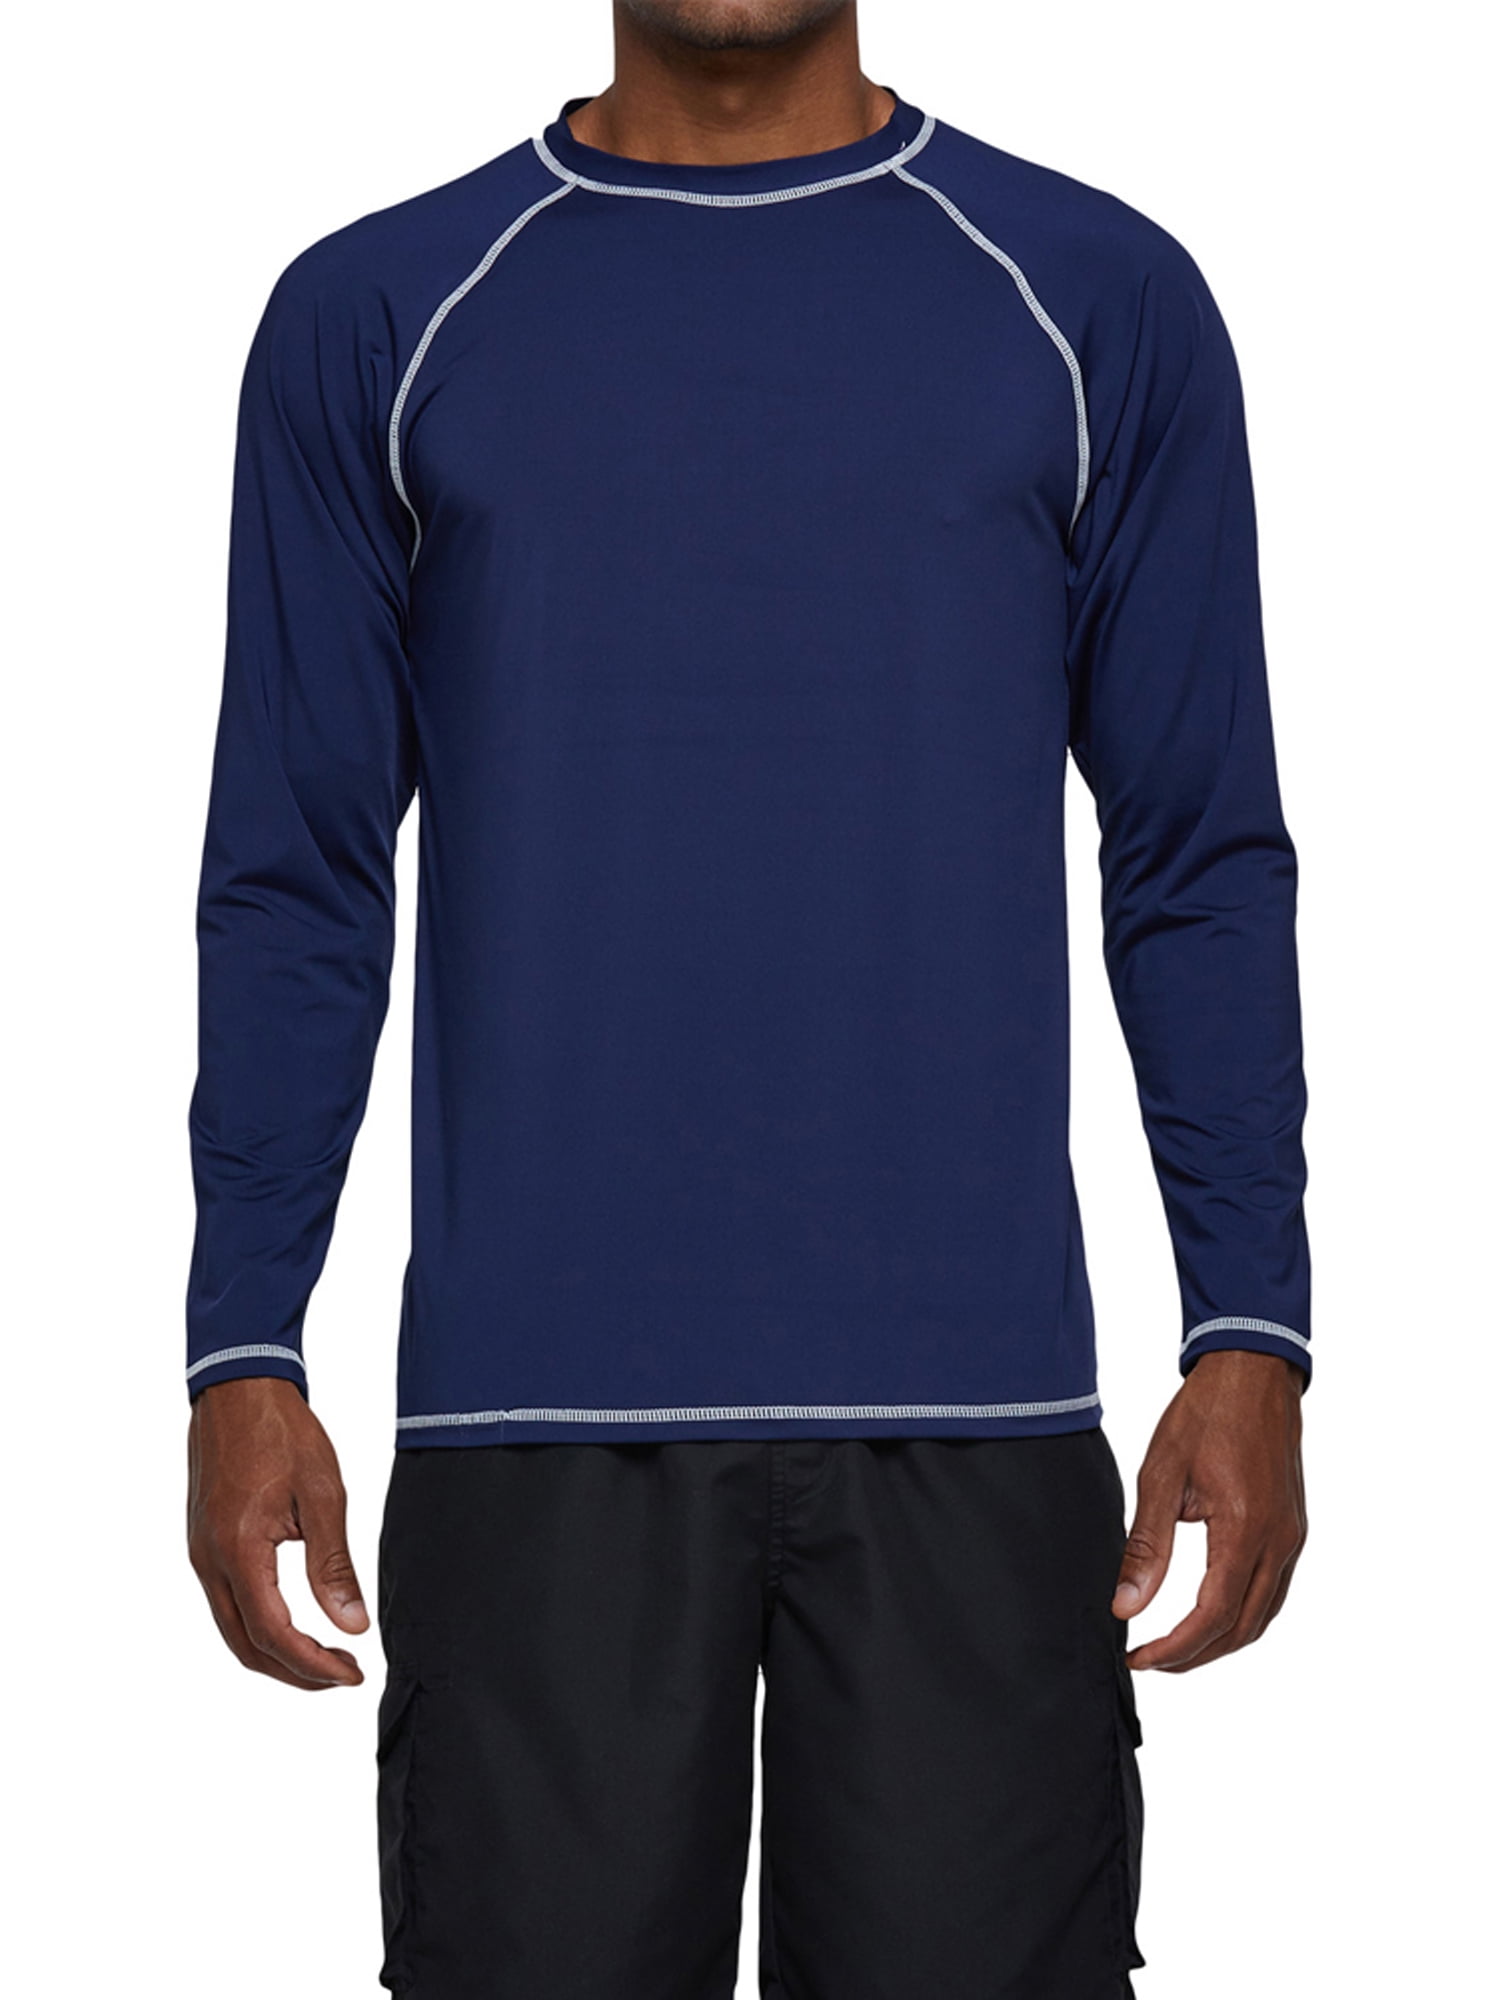 Pdbokew Long Sleeve Swim Shirts for Men Sun Protection Shirt Running  Rashguard UPF 50+ UV Swimwear Athletic Workout White Size L